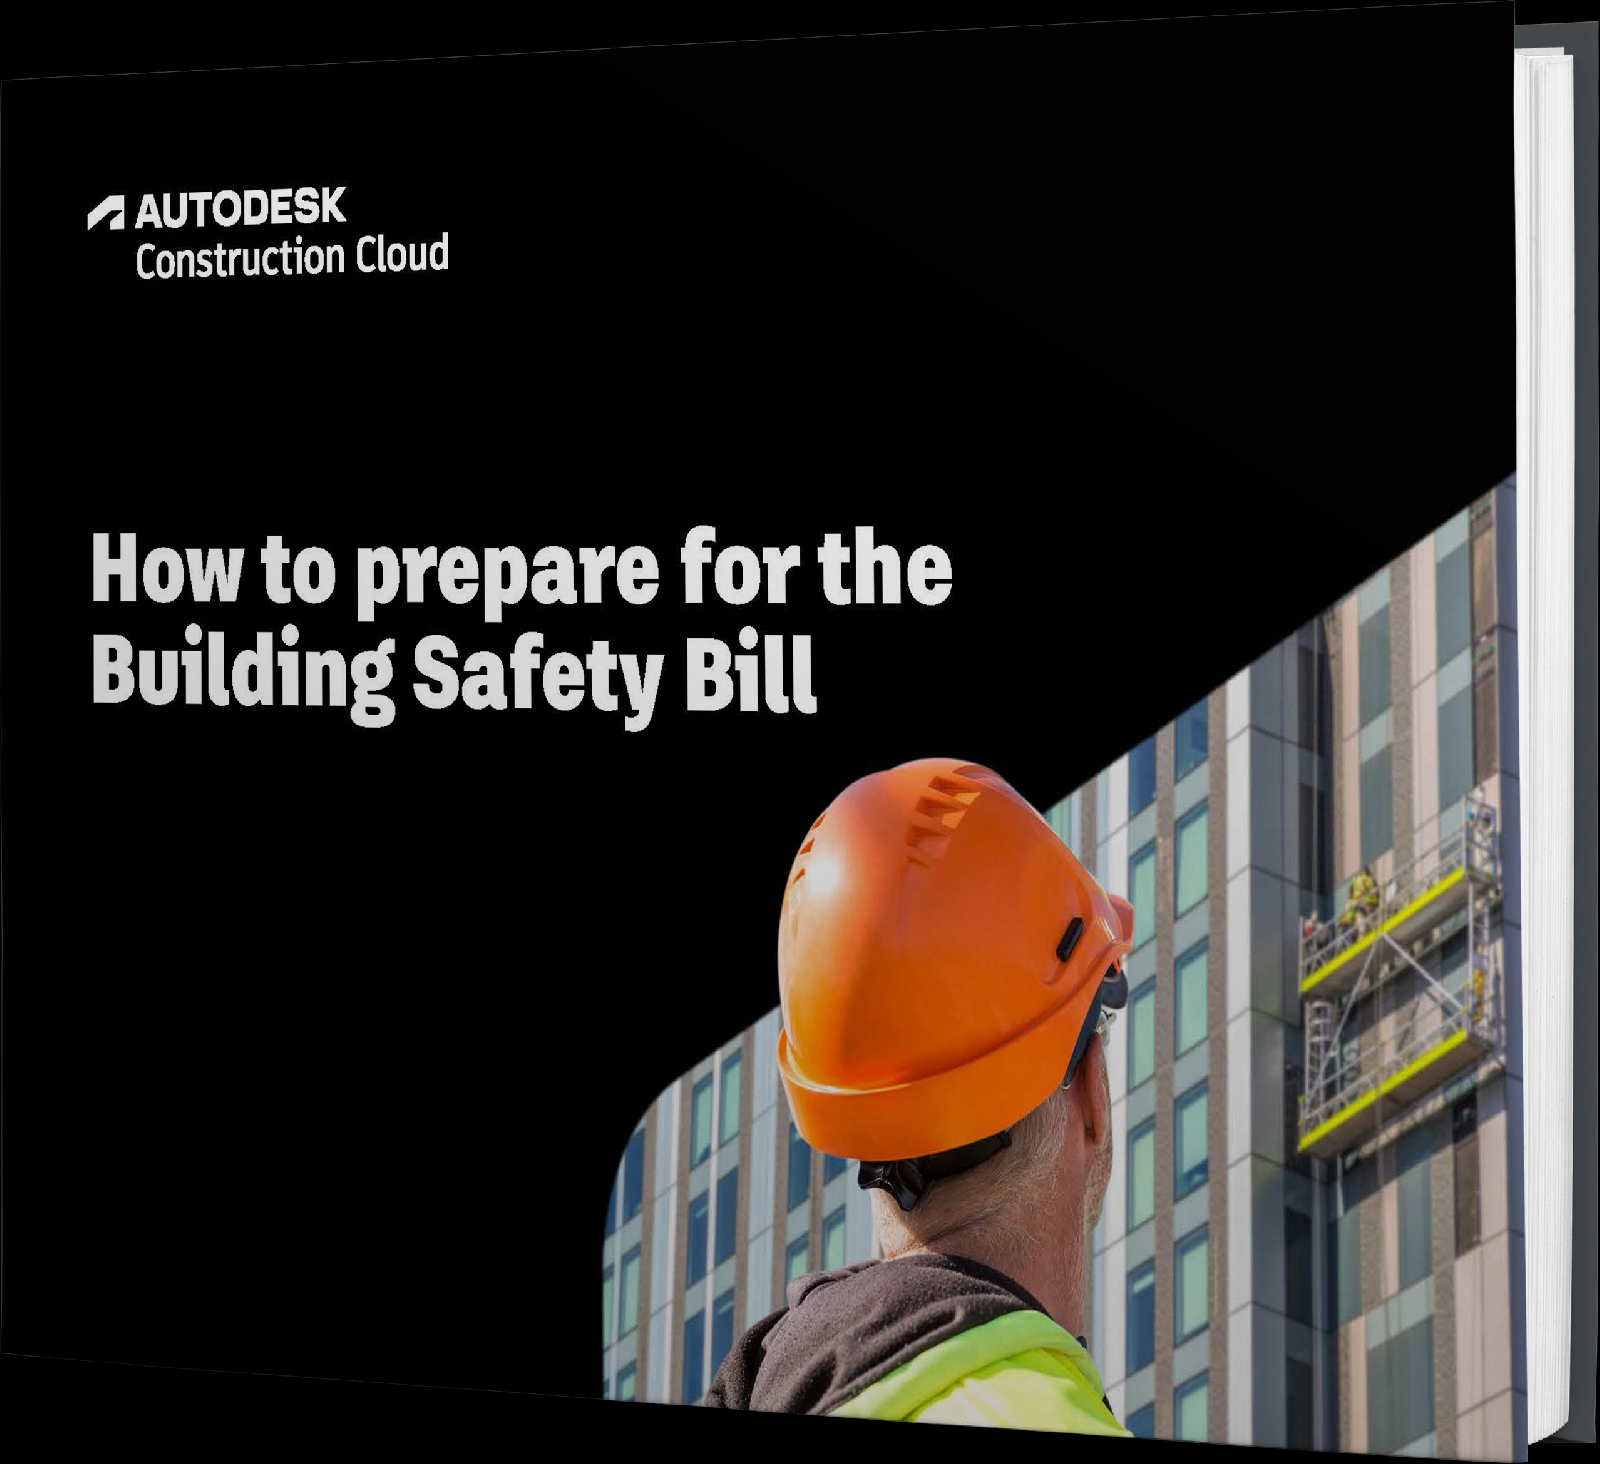 Building Safety Bill